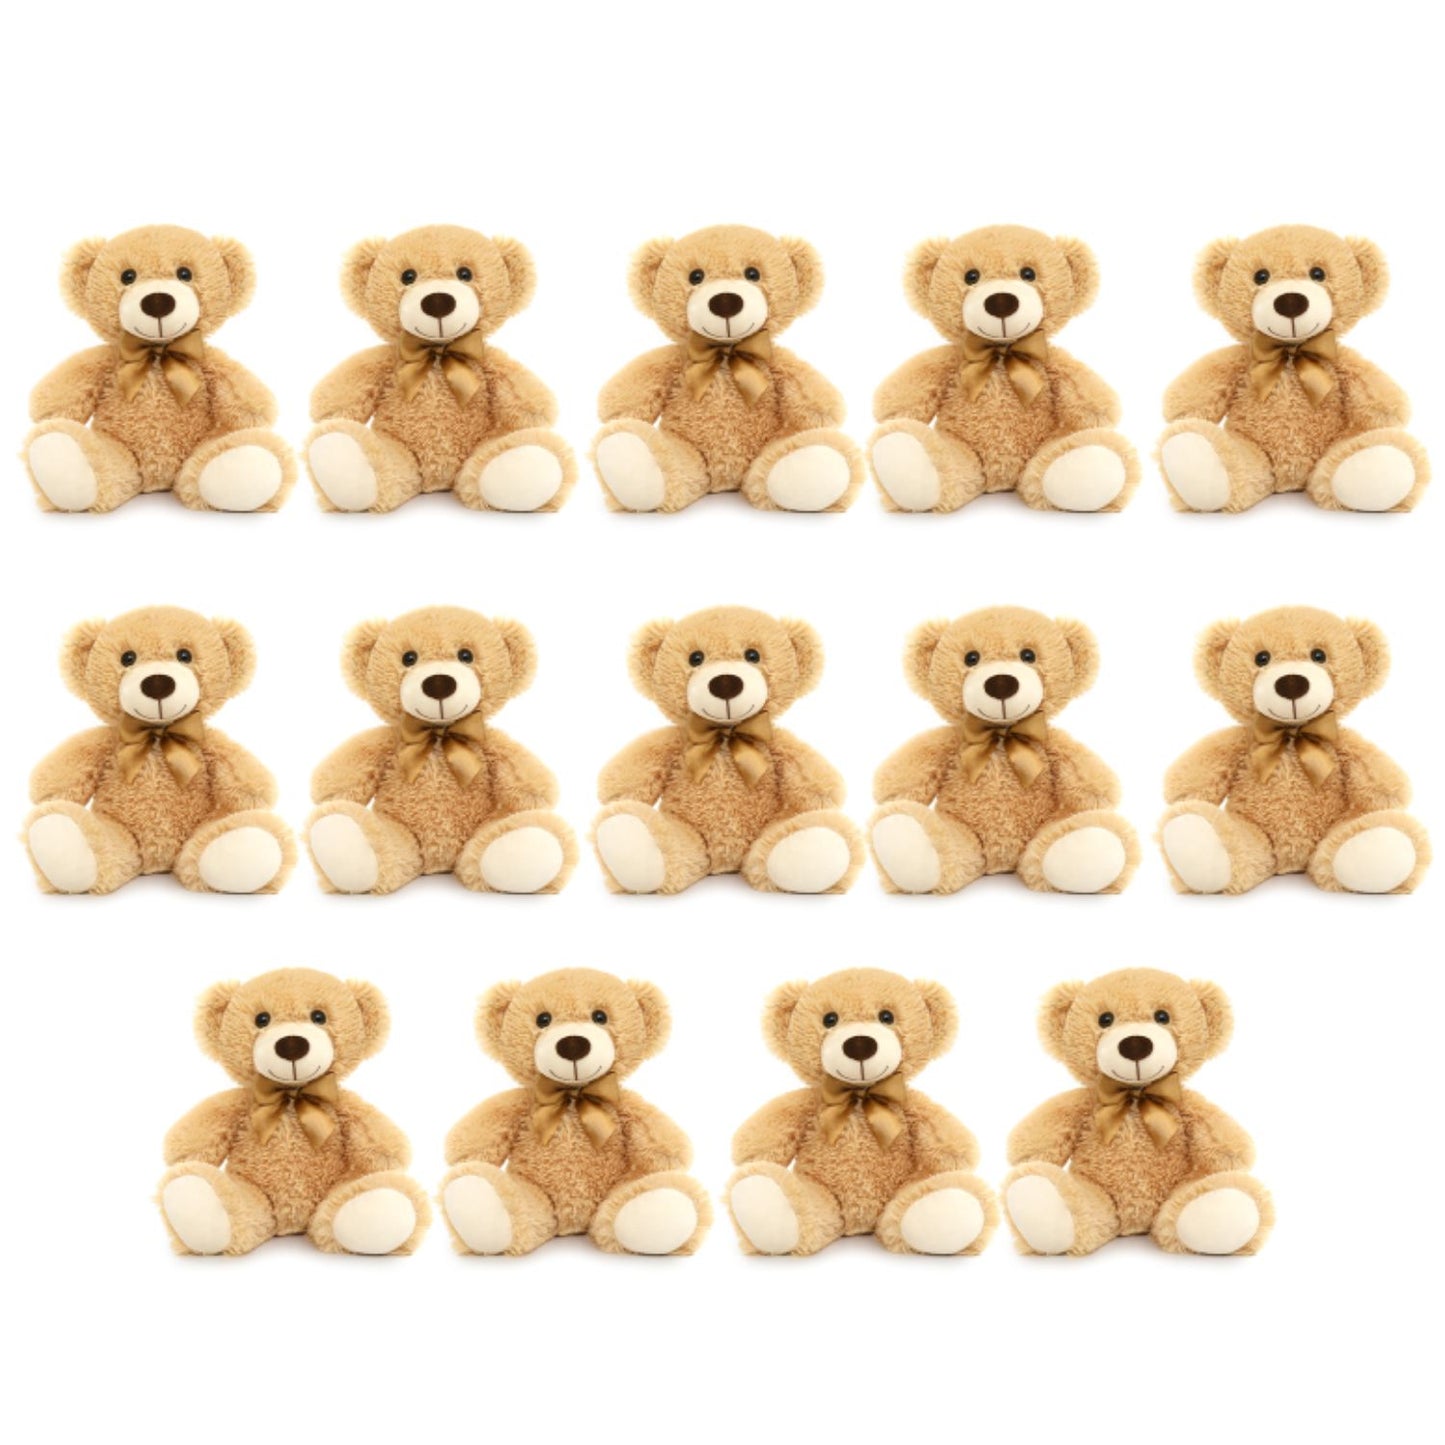 14 Pack Teddy Bear Plush Toys, Light Brown, 13.8 Inches - MorisMos Stuffed Animals